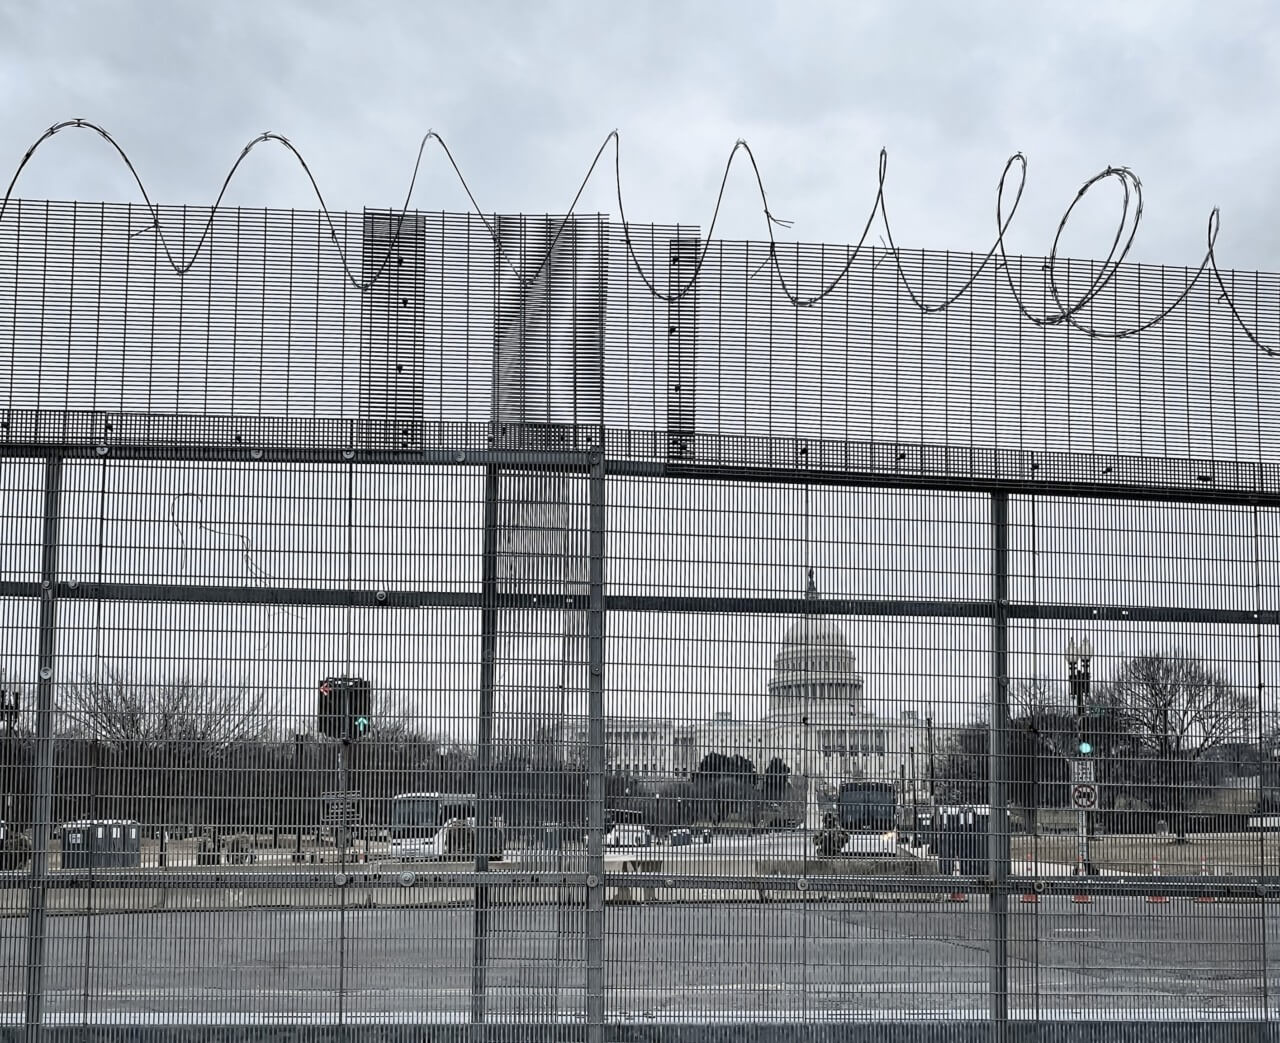 razor-wire fencing U.S. Capitol